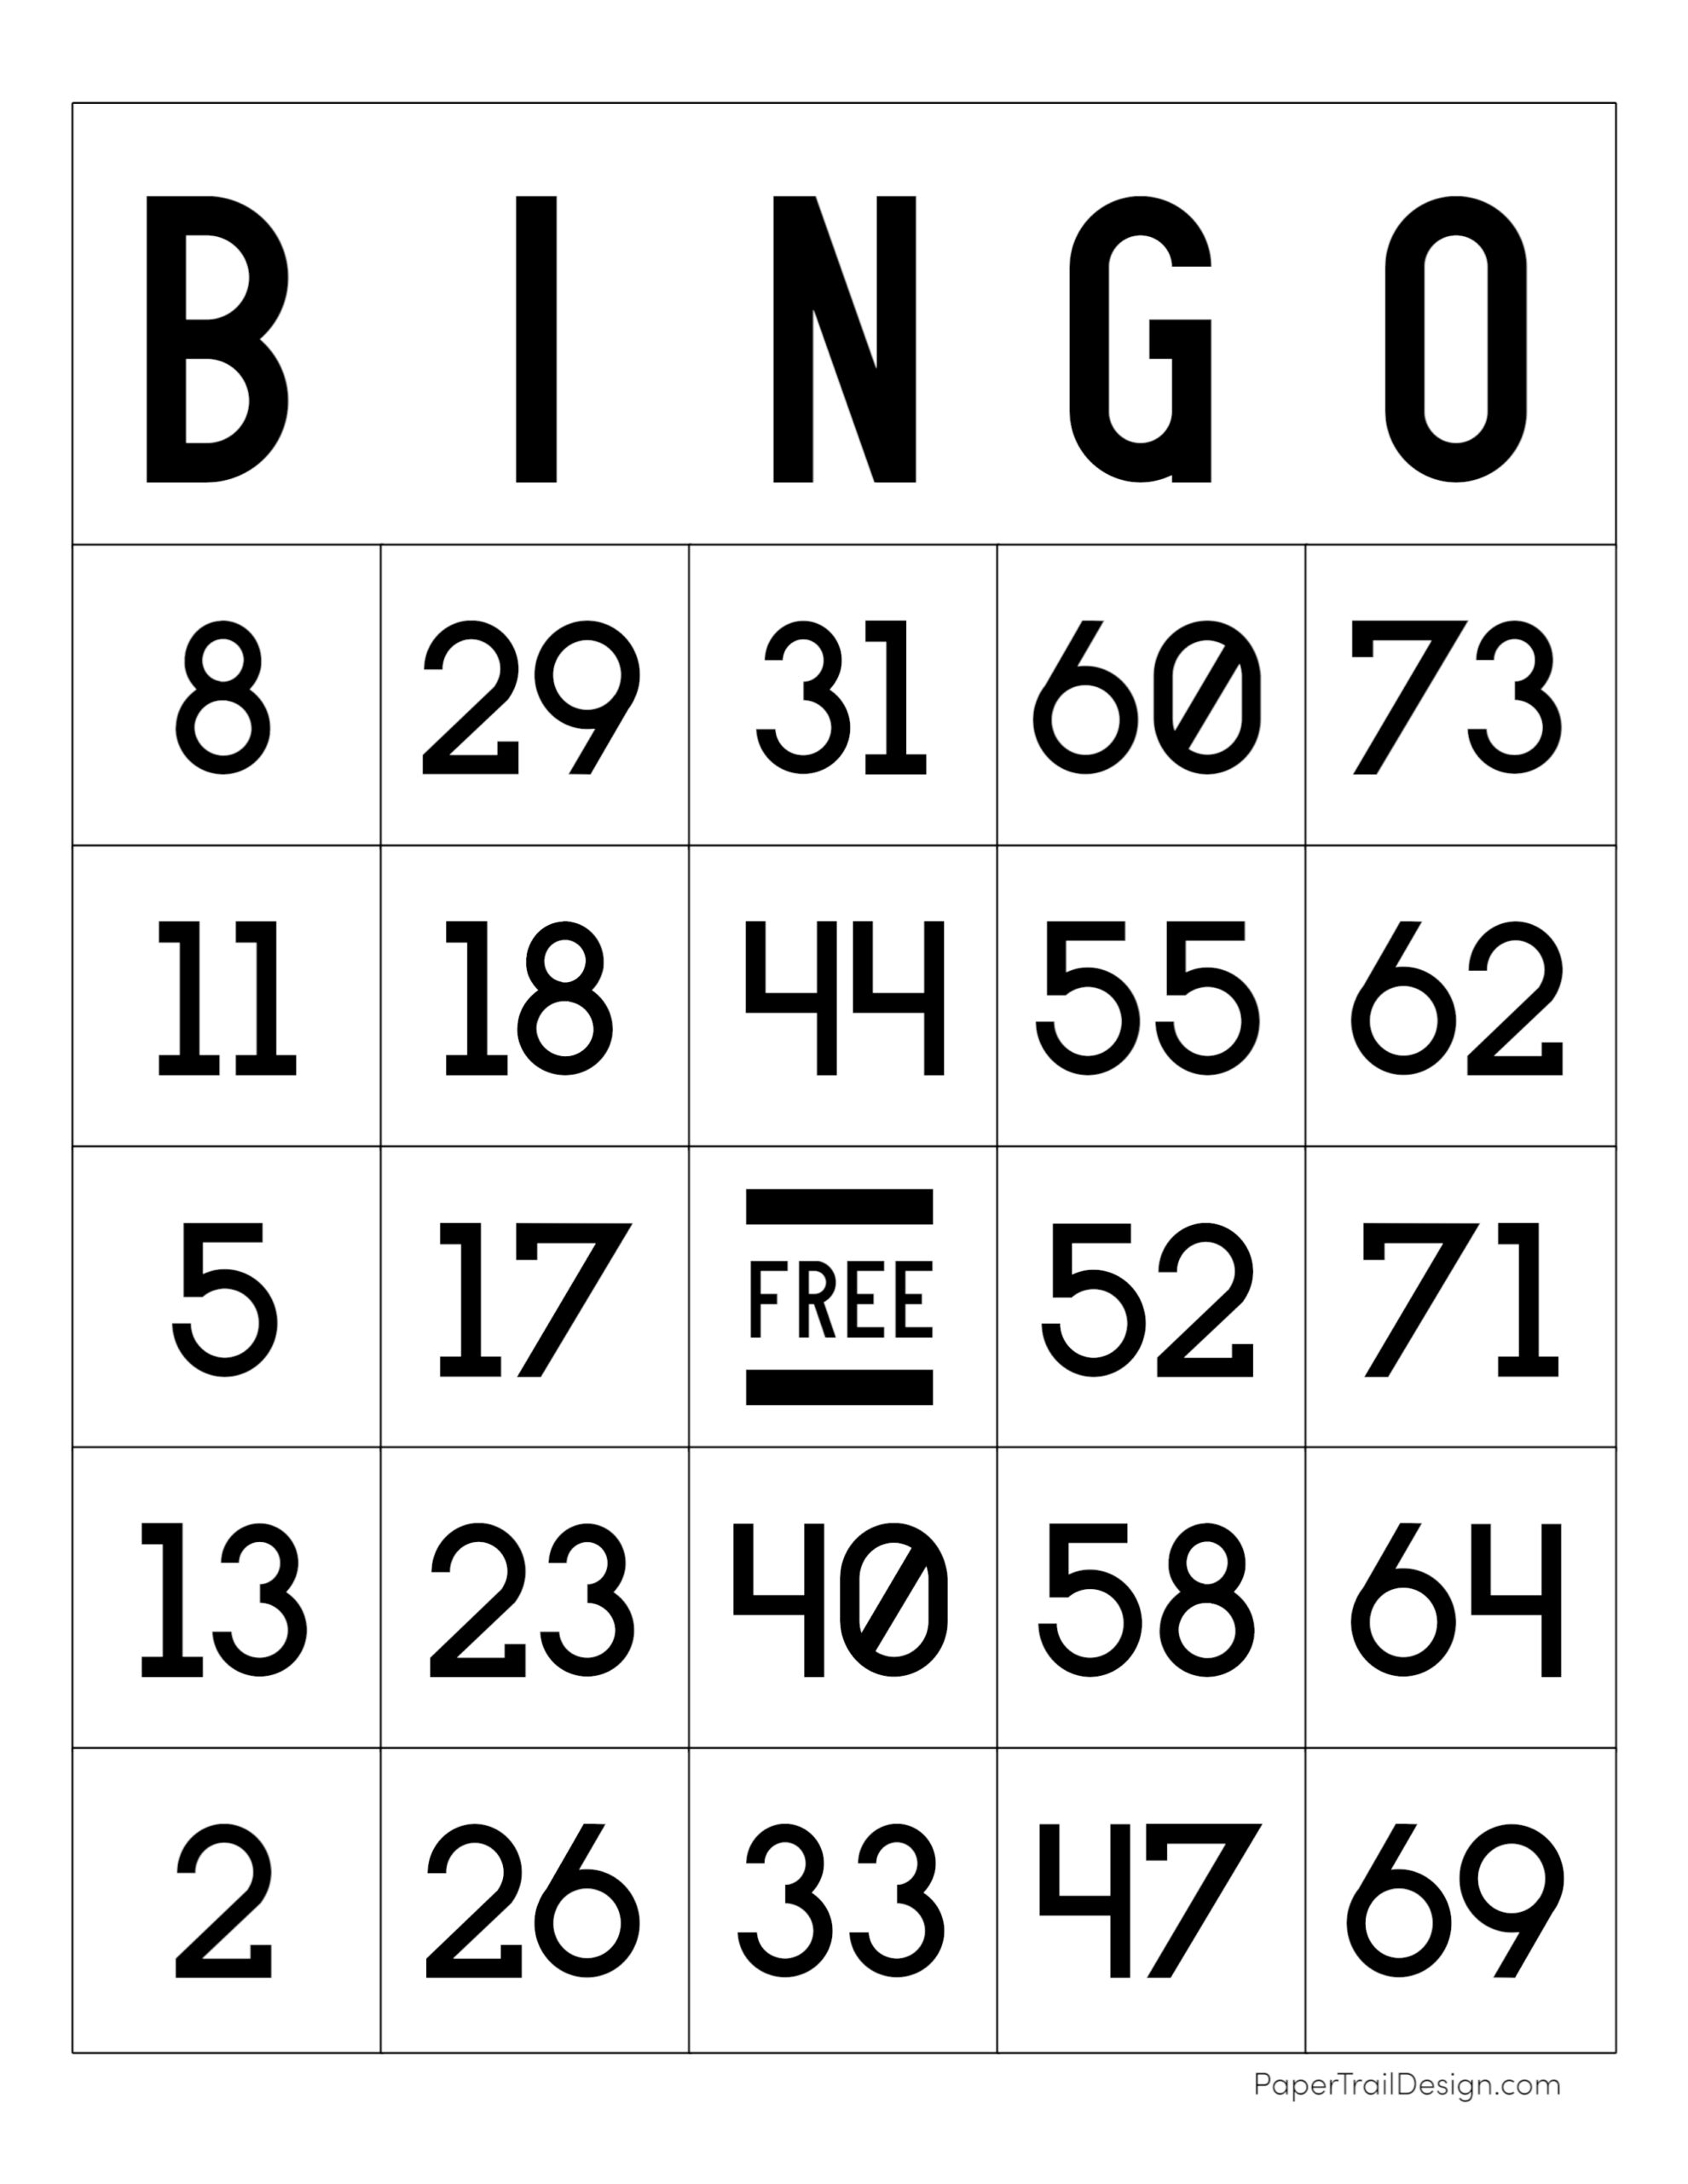 bingo-cards-to-print-custom-bingo-cards-free-printable-bingo-cards